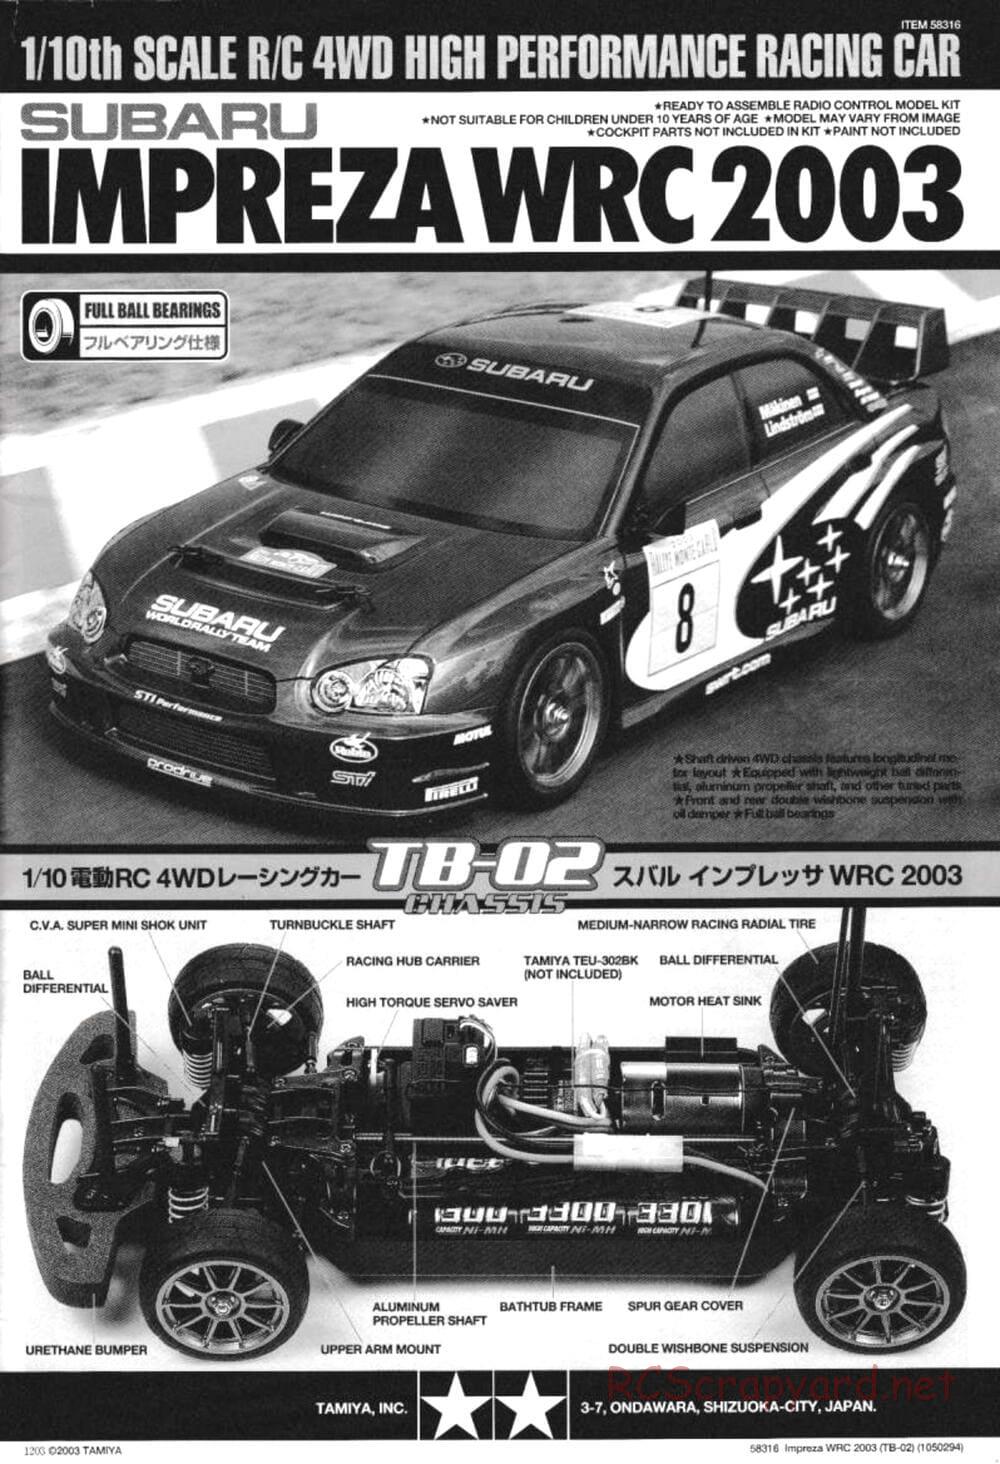 Tamiya - Subaru Impreza WRC 2003 - TB-02 Chassis - Manual - Page 1